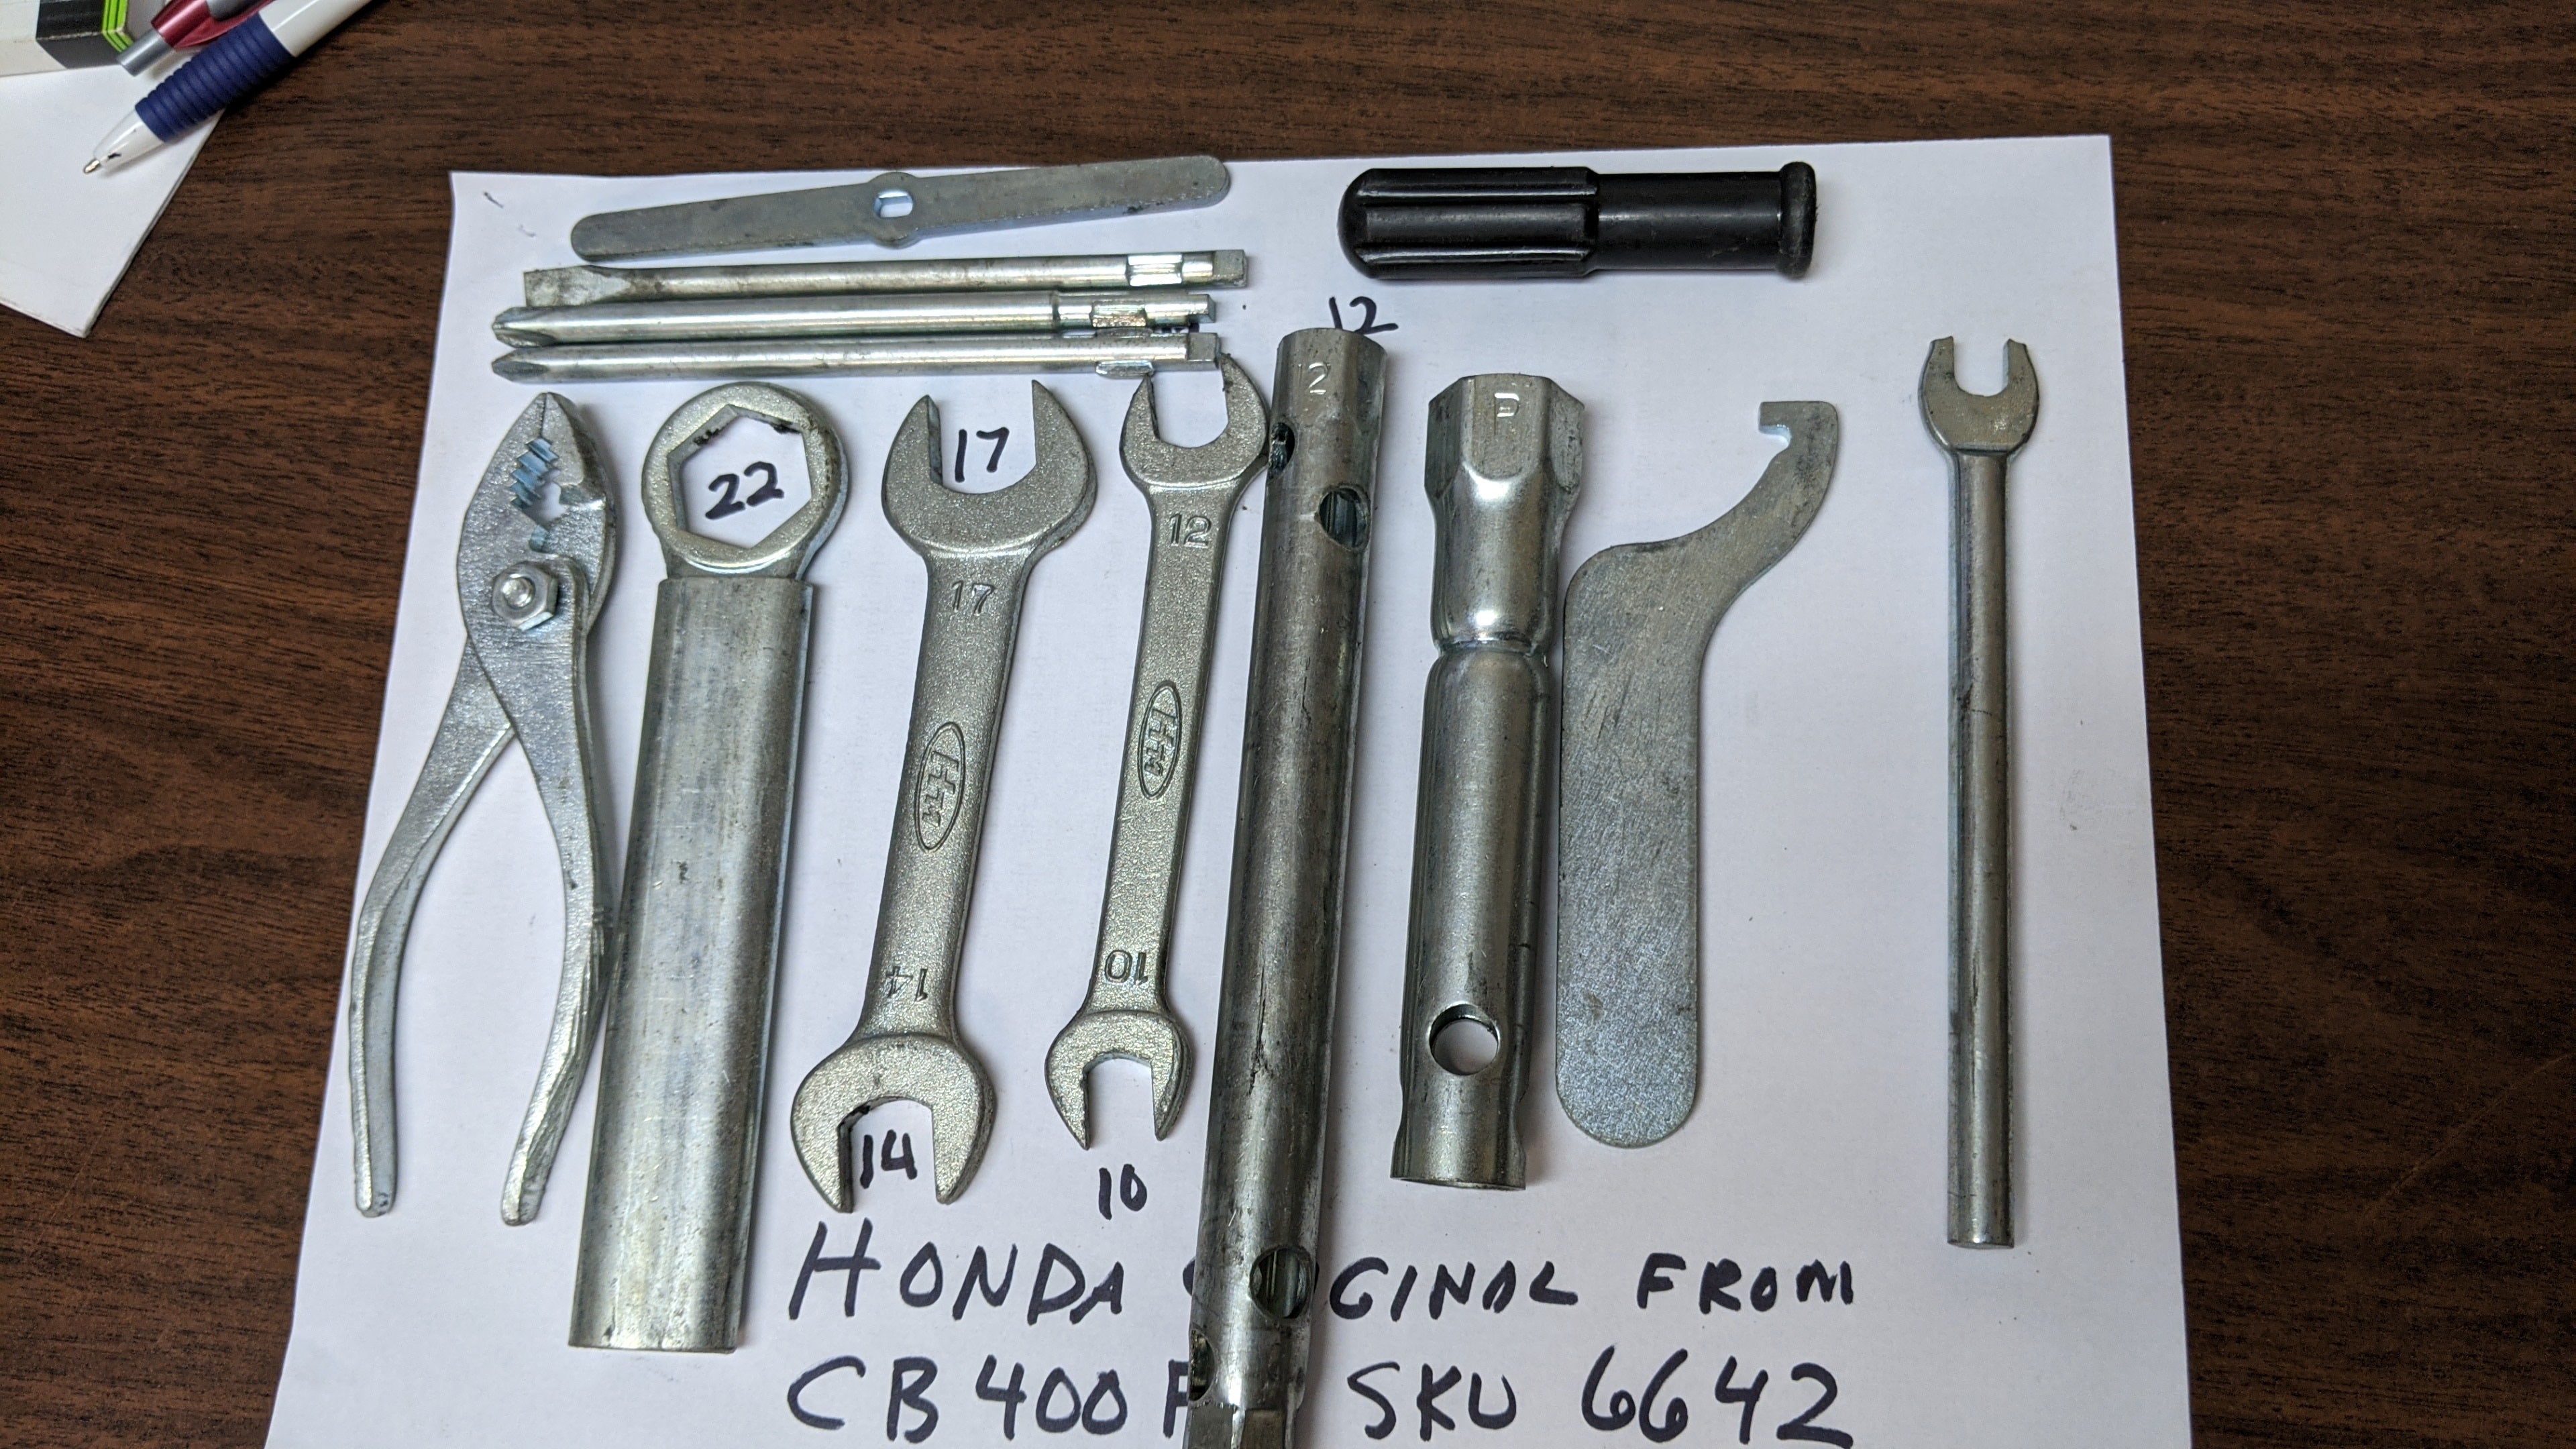 HONDA OEM Motorcycle parts : Etichette, chiavi di petrolio